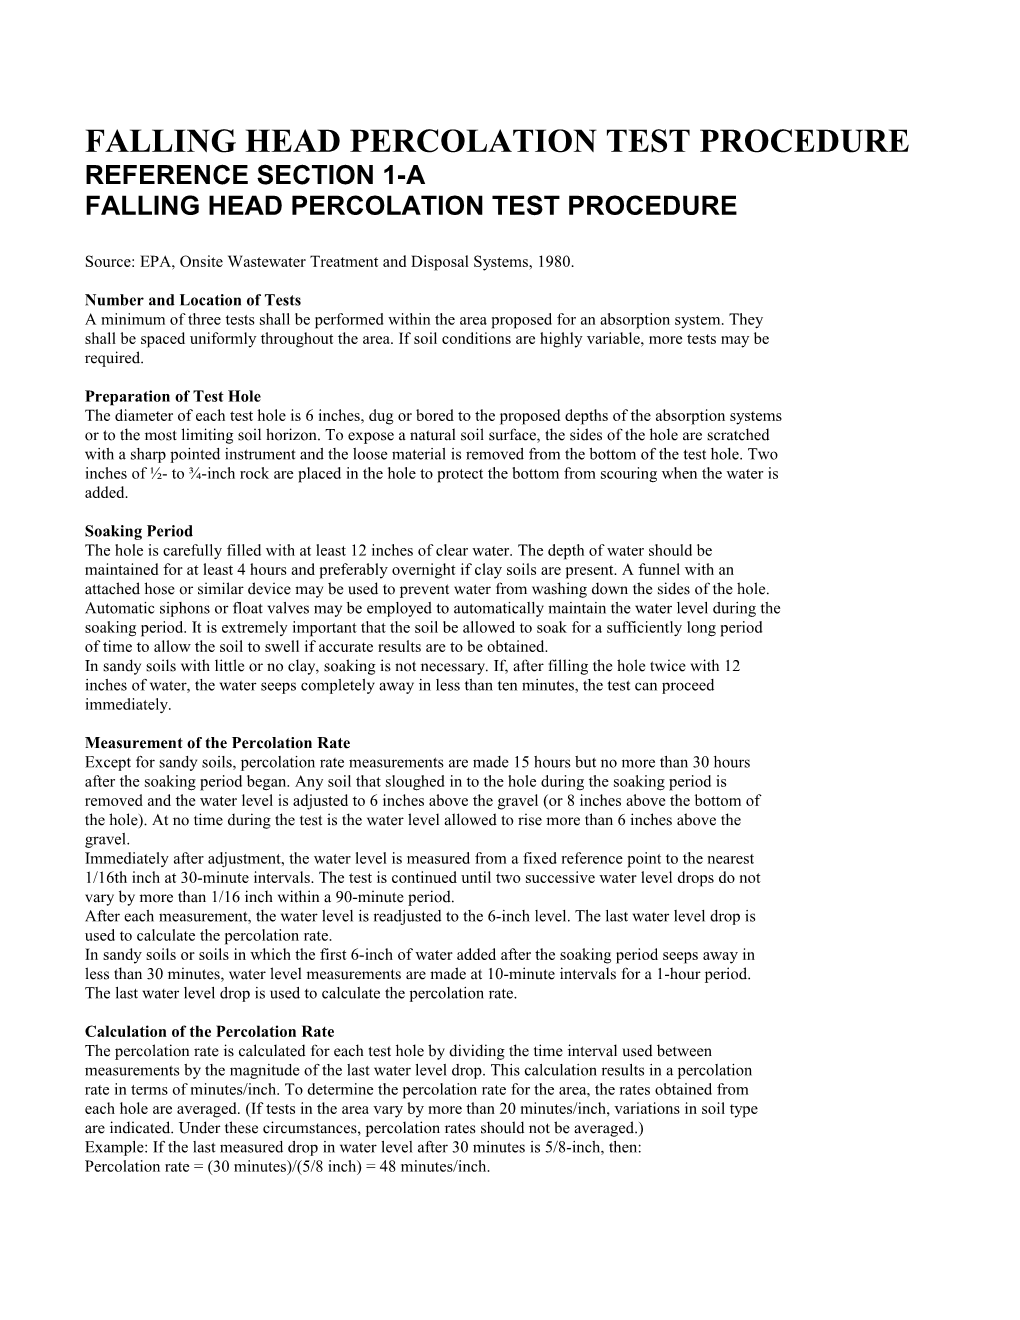 Falling Head Percolation Test Procedure